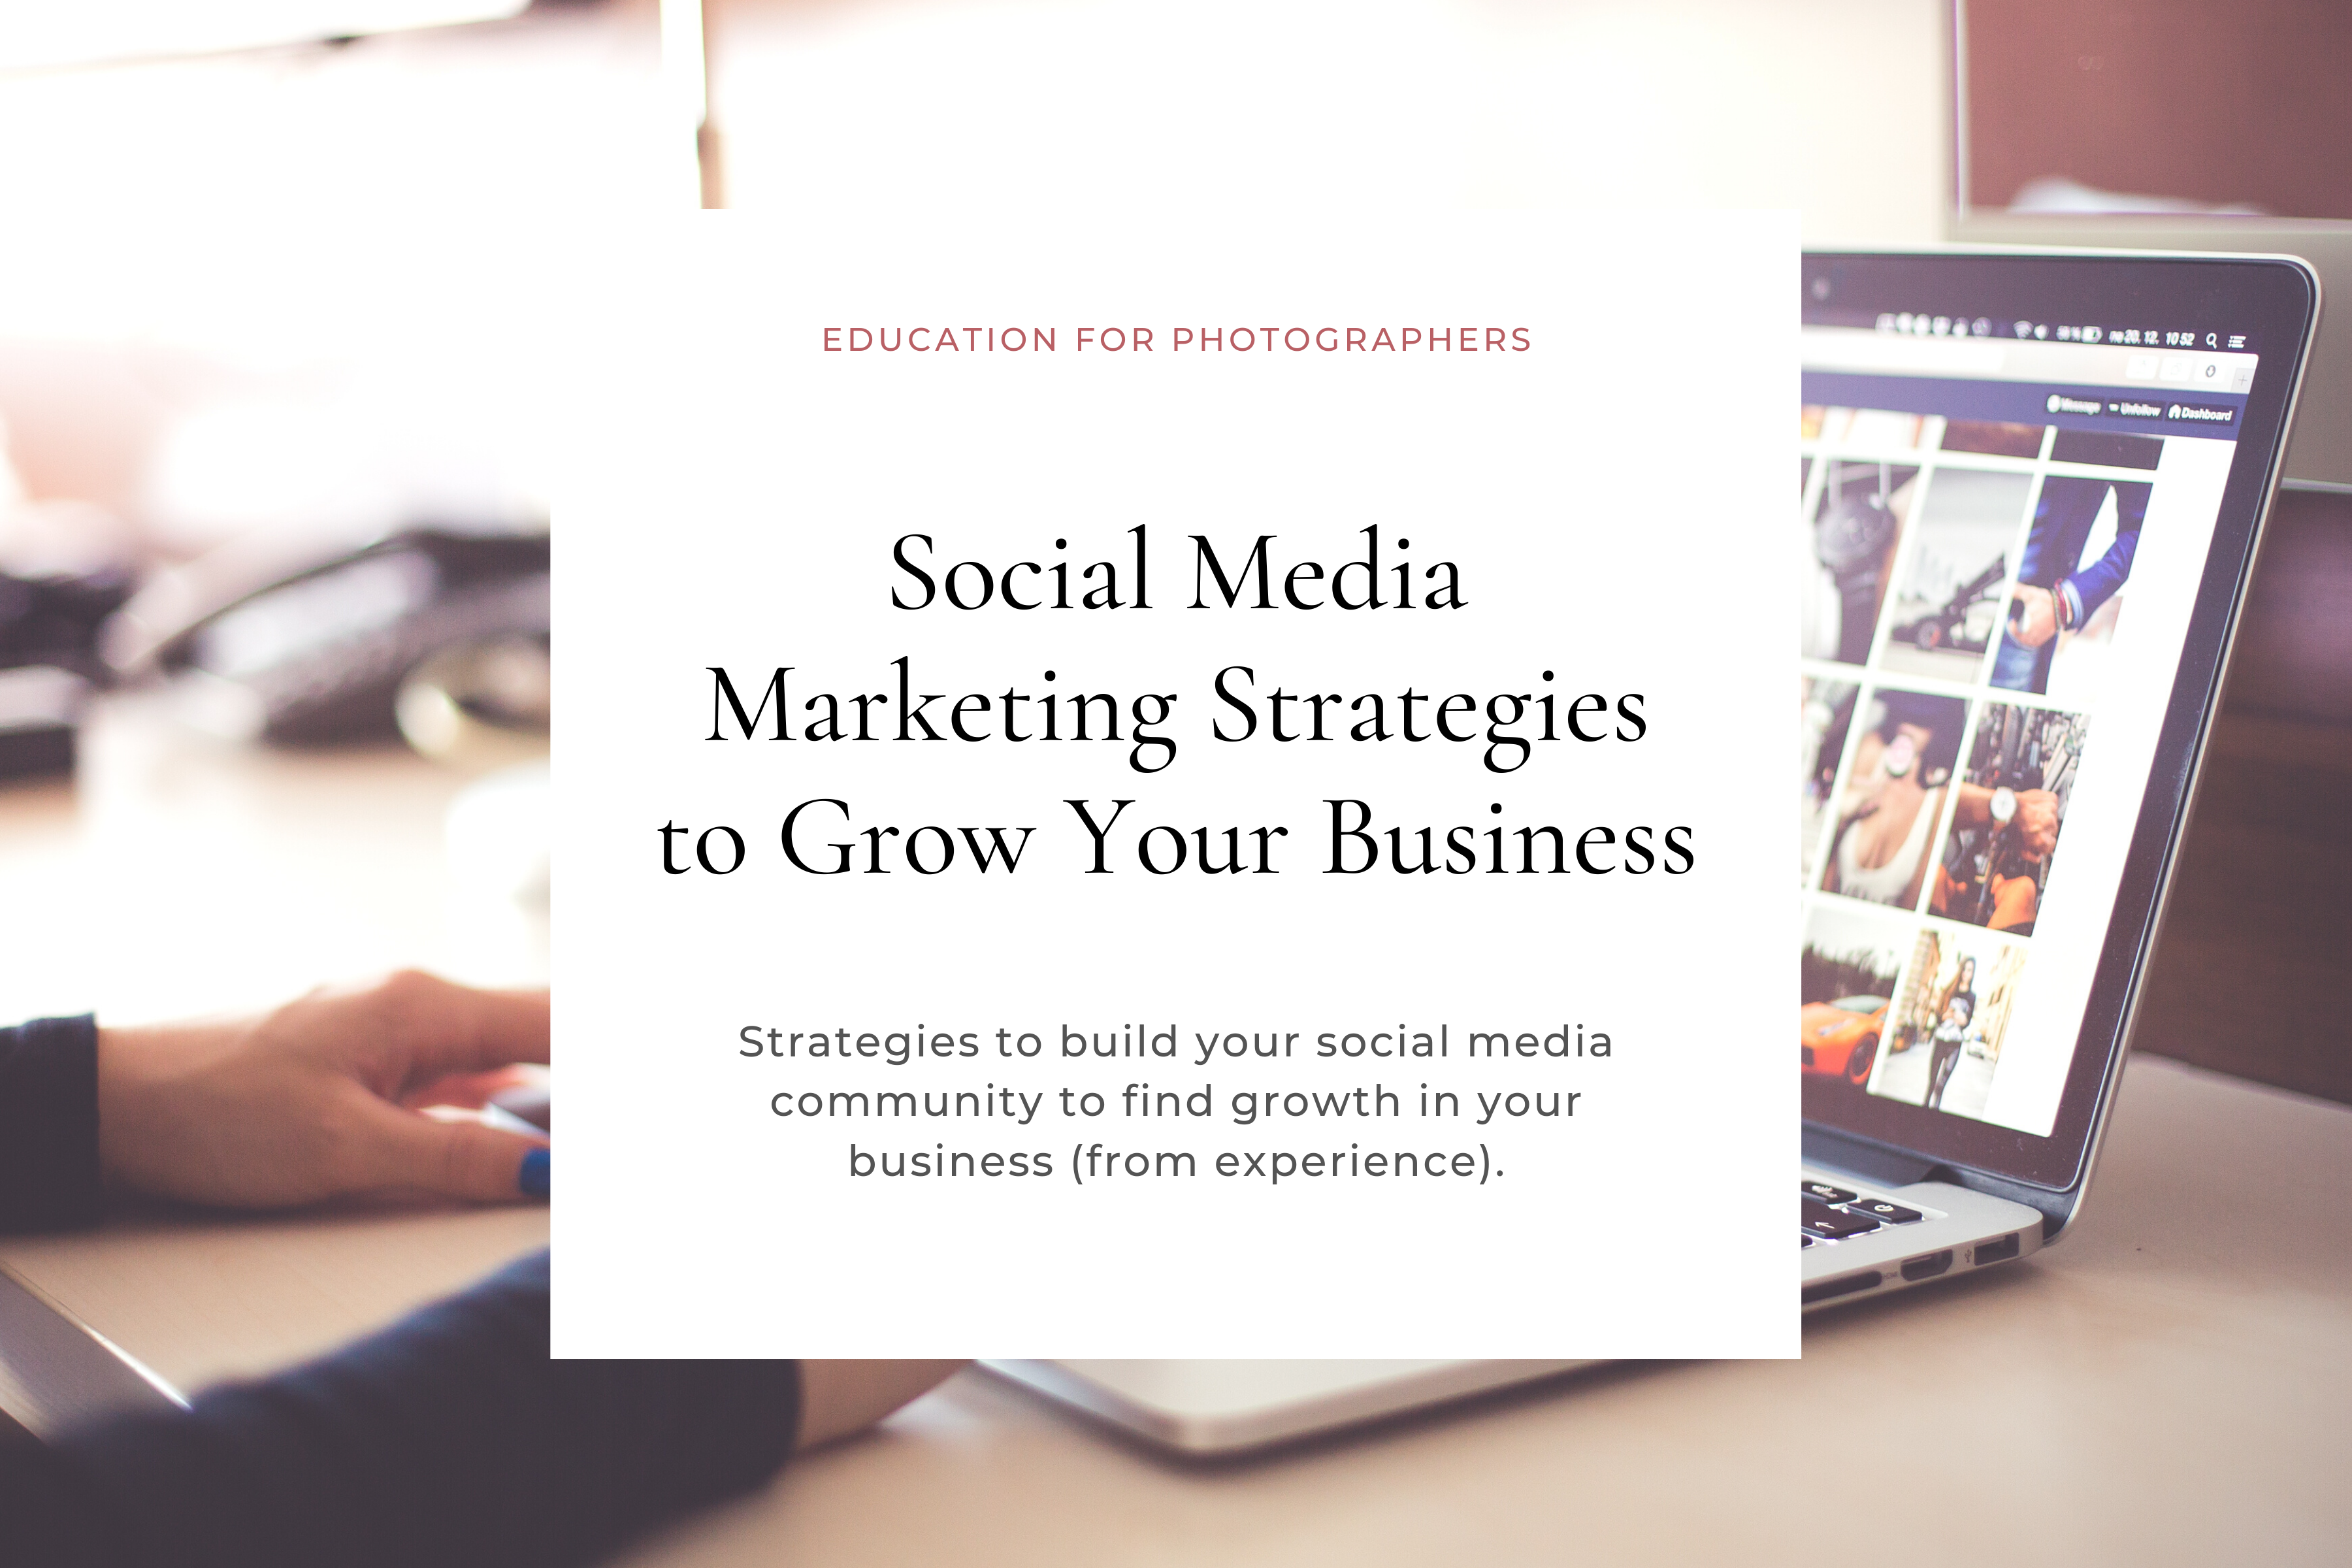 Social Media Marketing for photographers